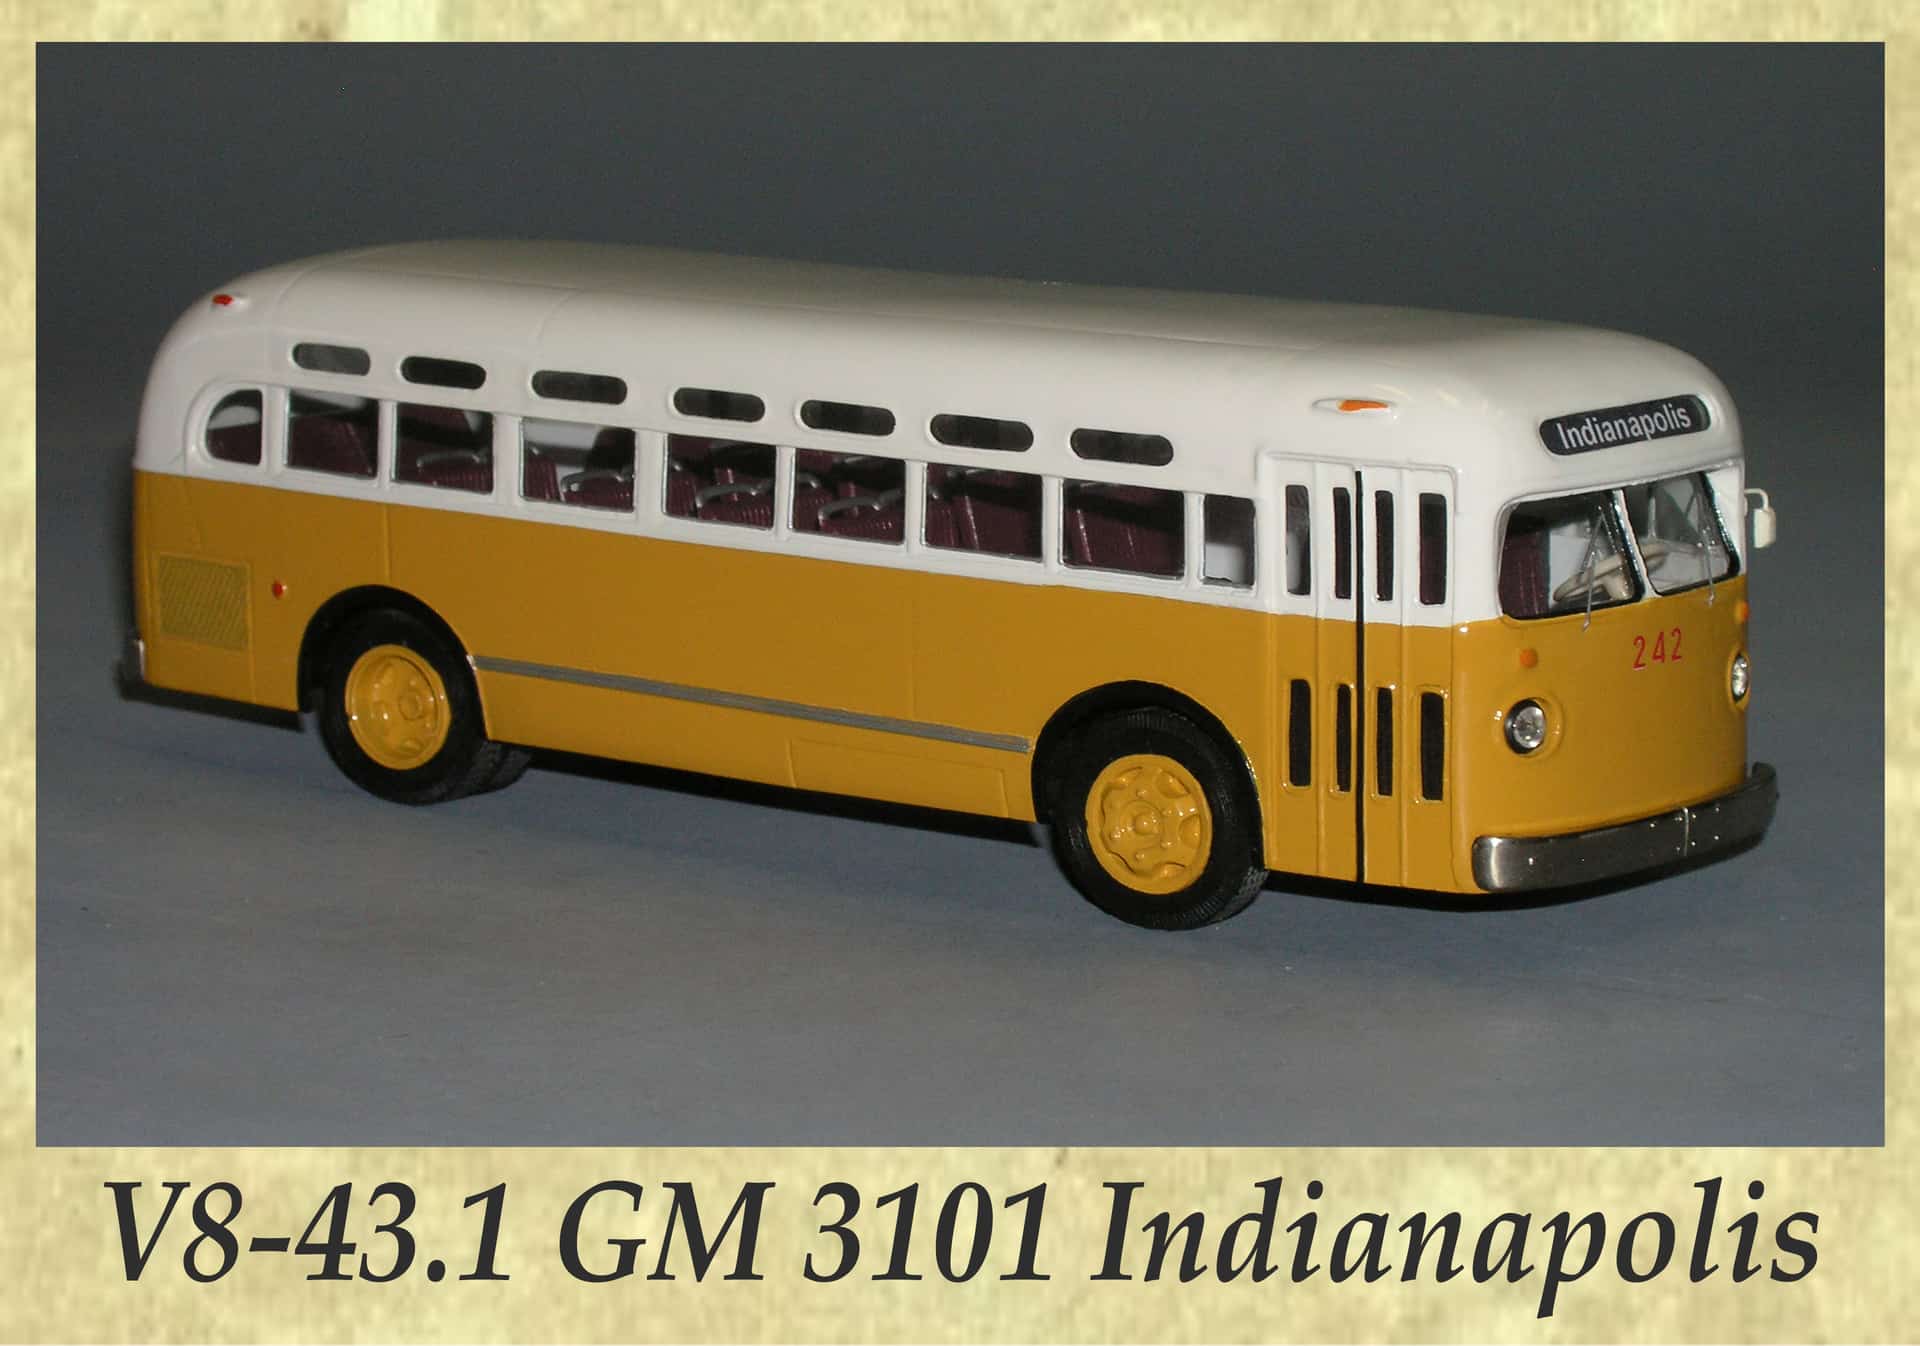 V8-43.1 GM 3101 Indianapolis